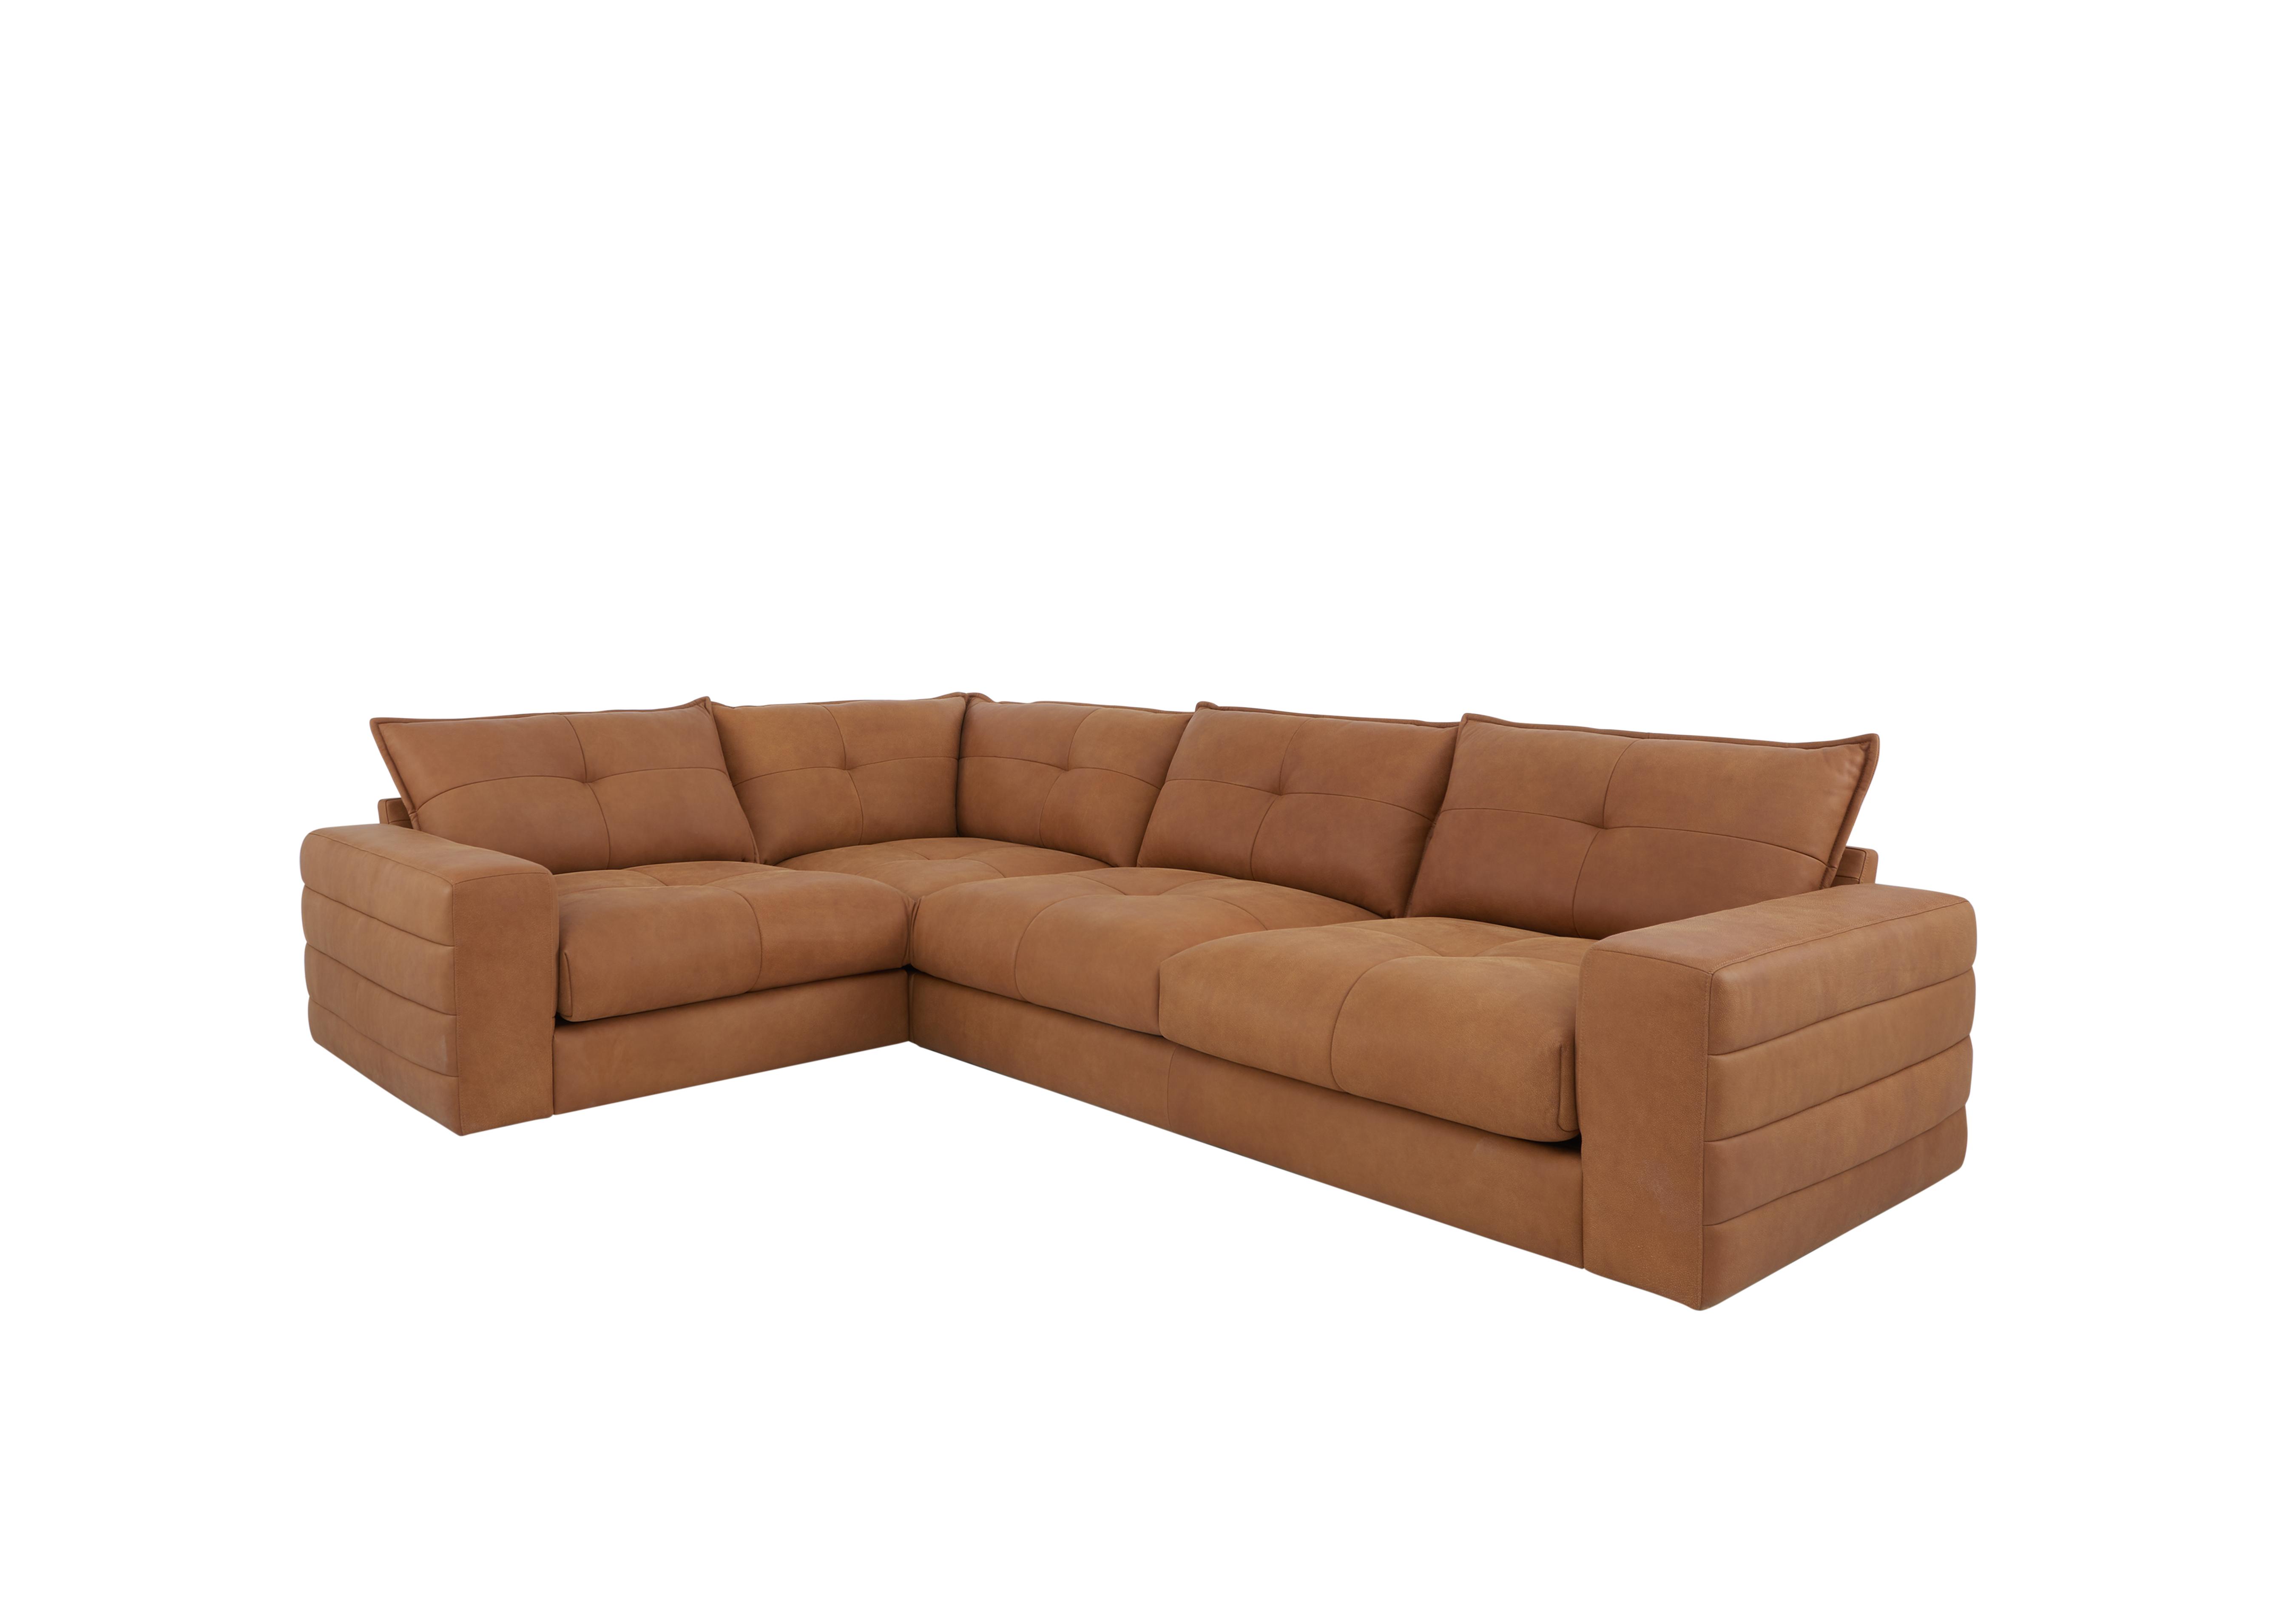 Boutique Brando Small Leather Corner Sofa in Stone Washed Tan on Furniture Village